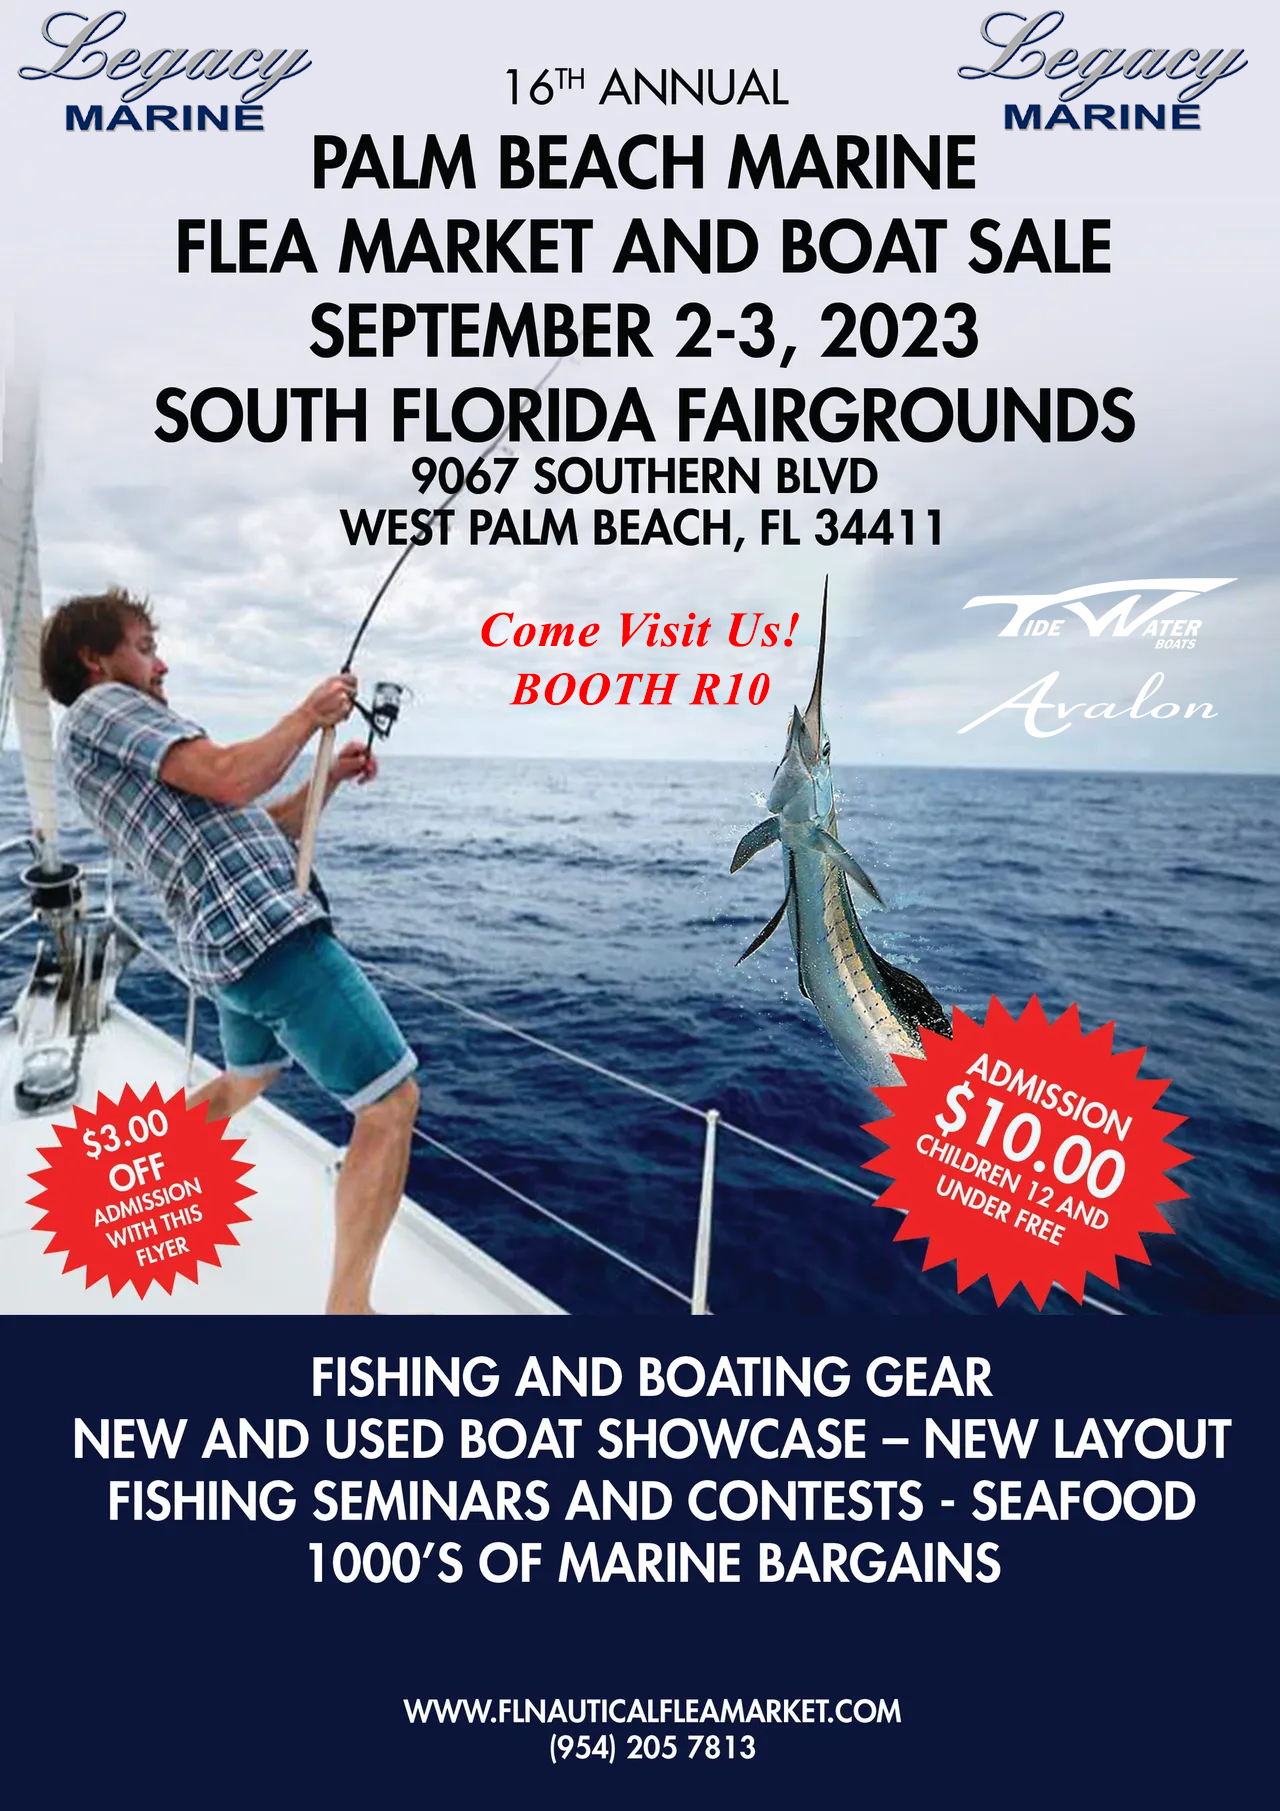 The Palm Beach Flea Market & Boat Show - Legacy Marine